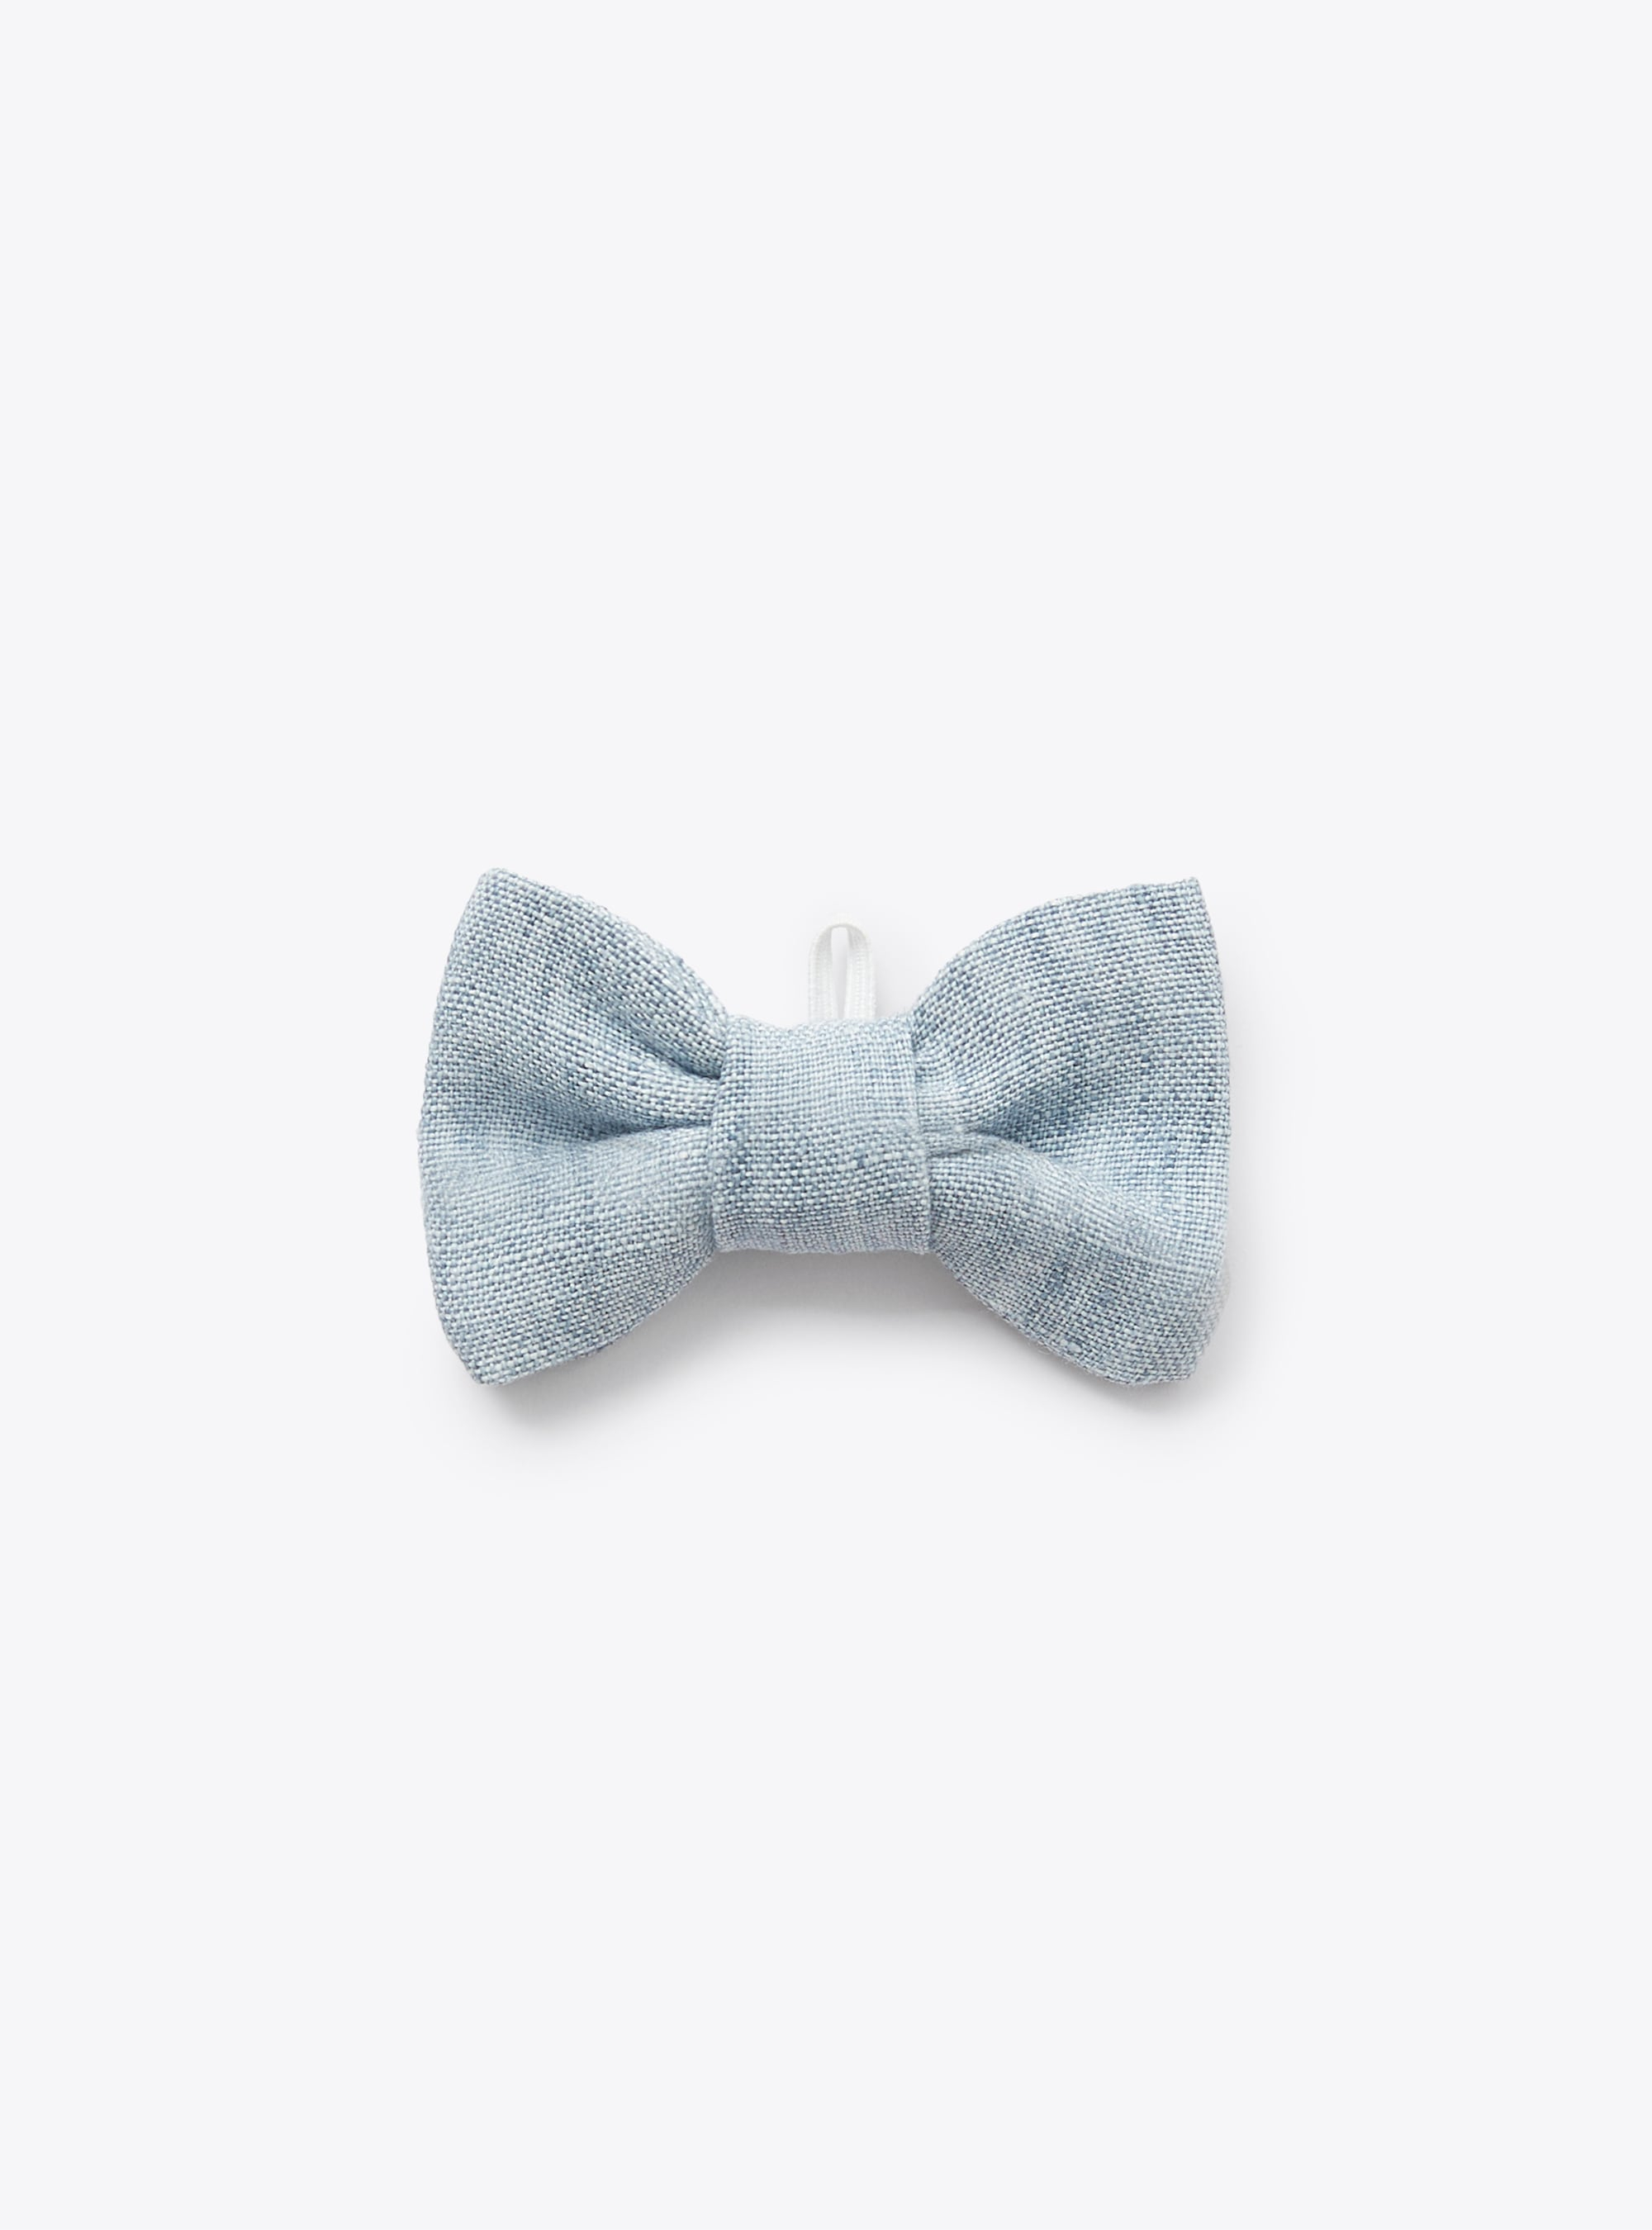 Bow tie for baby boys in sky-blue linen - Accessories - Il Gufo